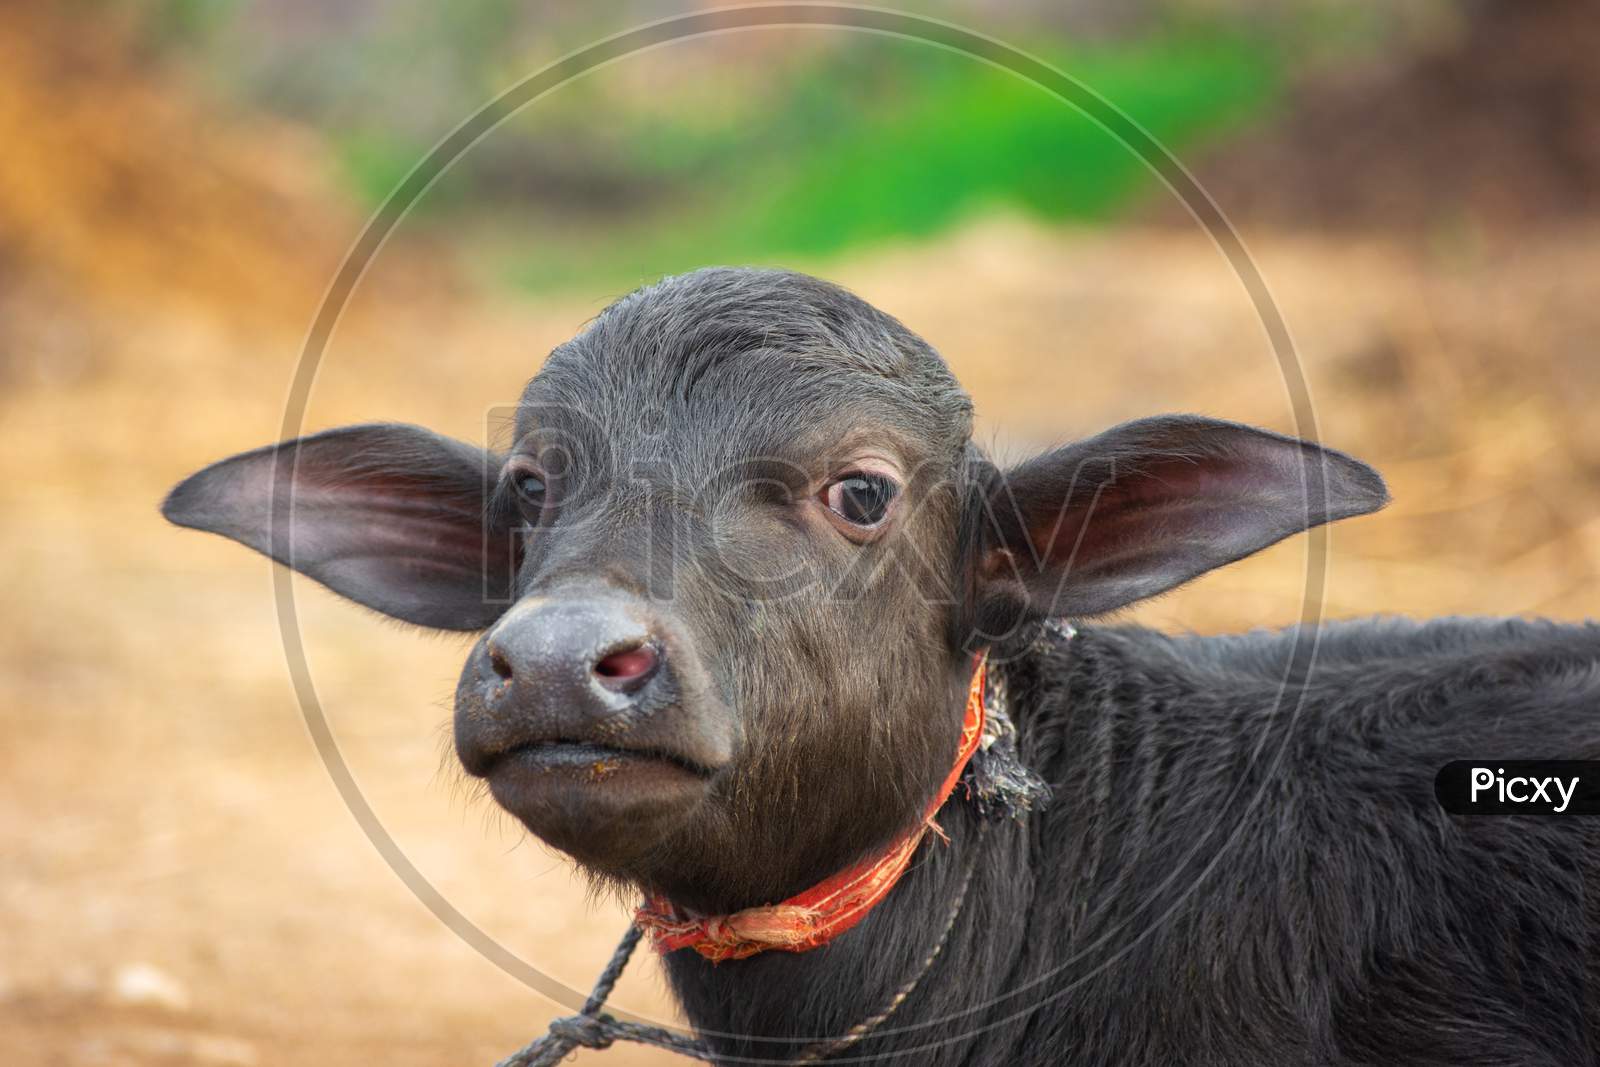 Baby buffalo in rural village